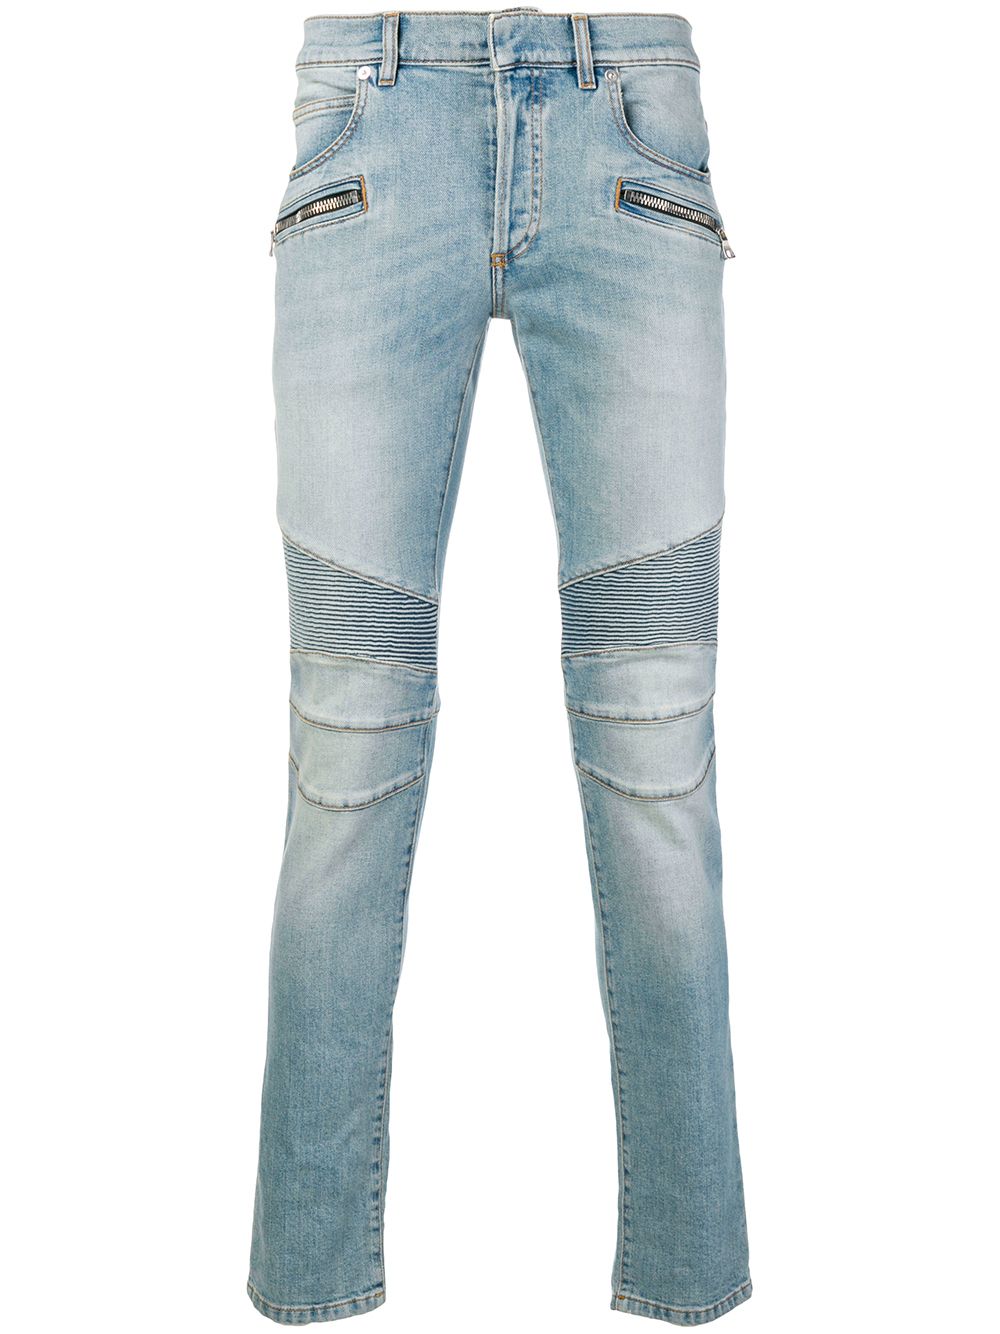 Mixed jeans. Джинсы Balmain мужские. Джинсы Amiri. Состаренные джинсы. Байкерские джинсы.